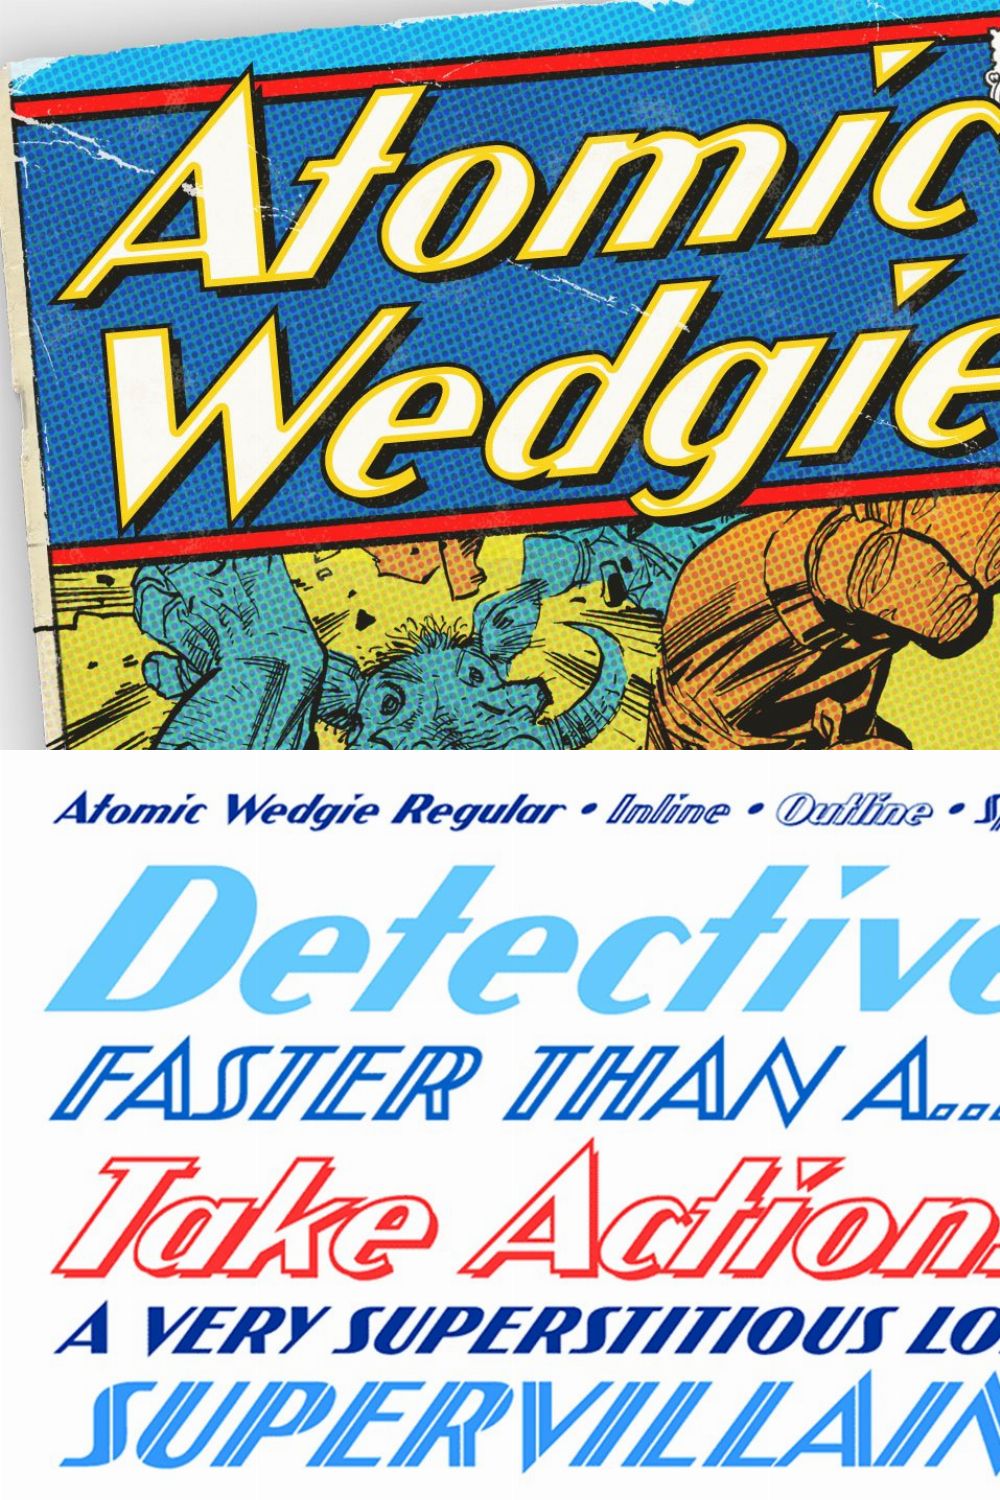 Atomic Wedgie - Art Deco comic font pinterest preview image.